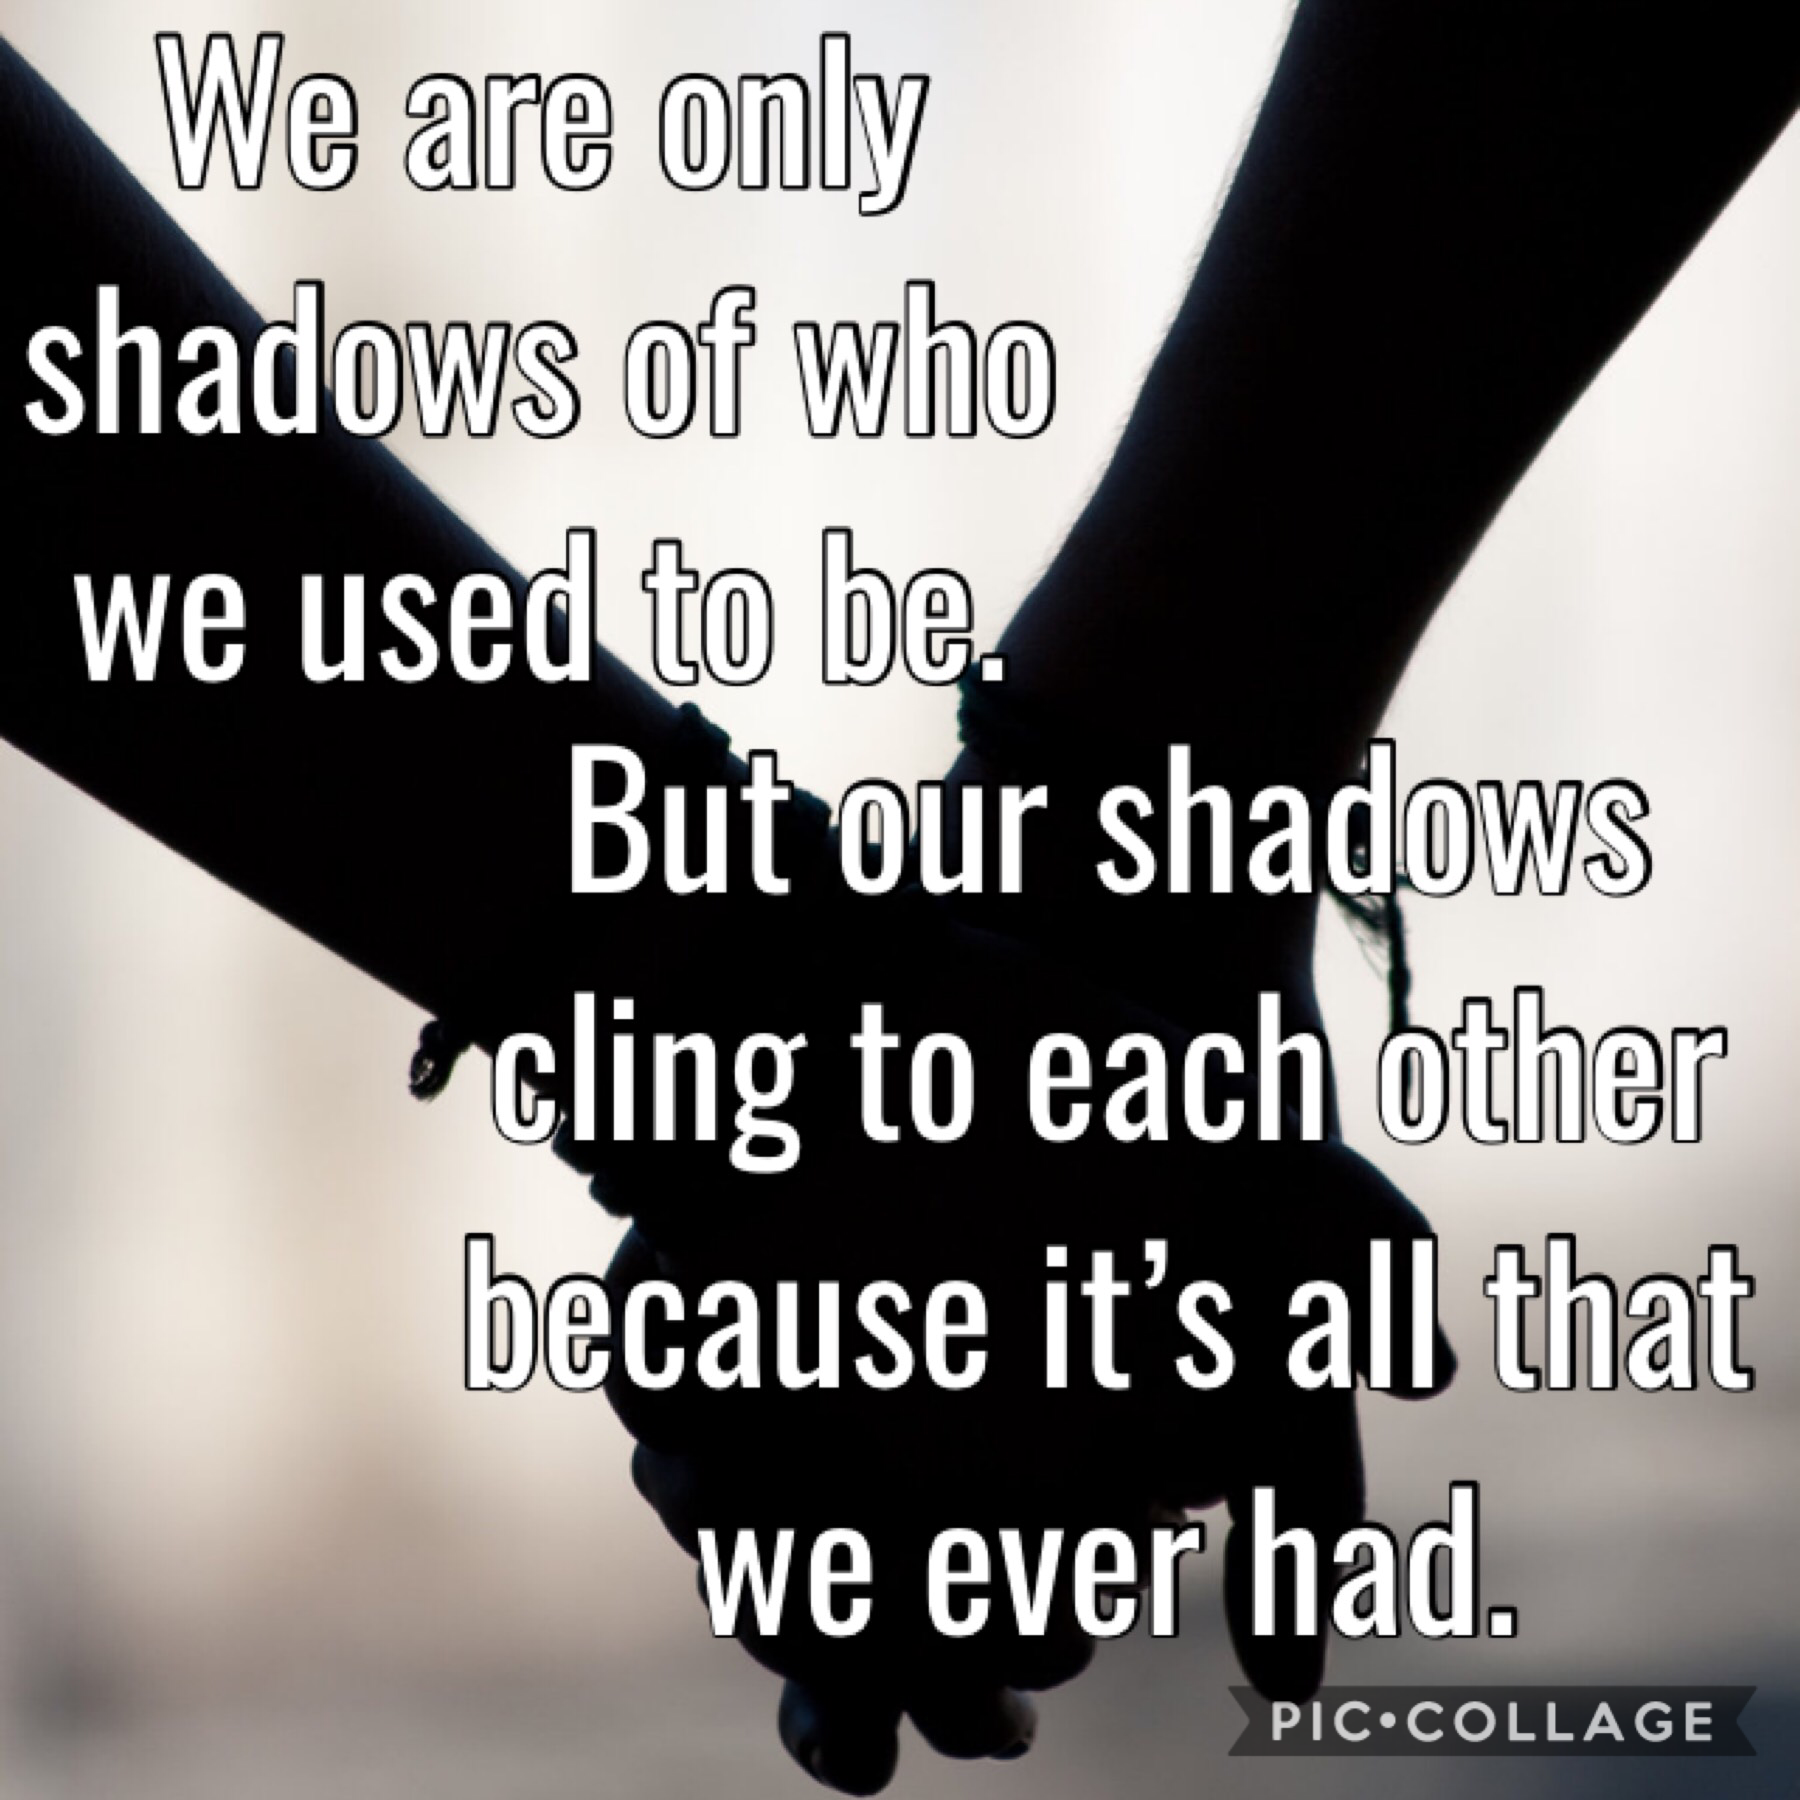 Shadows of love.